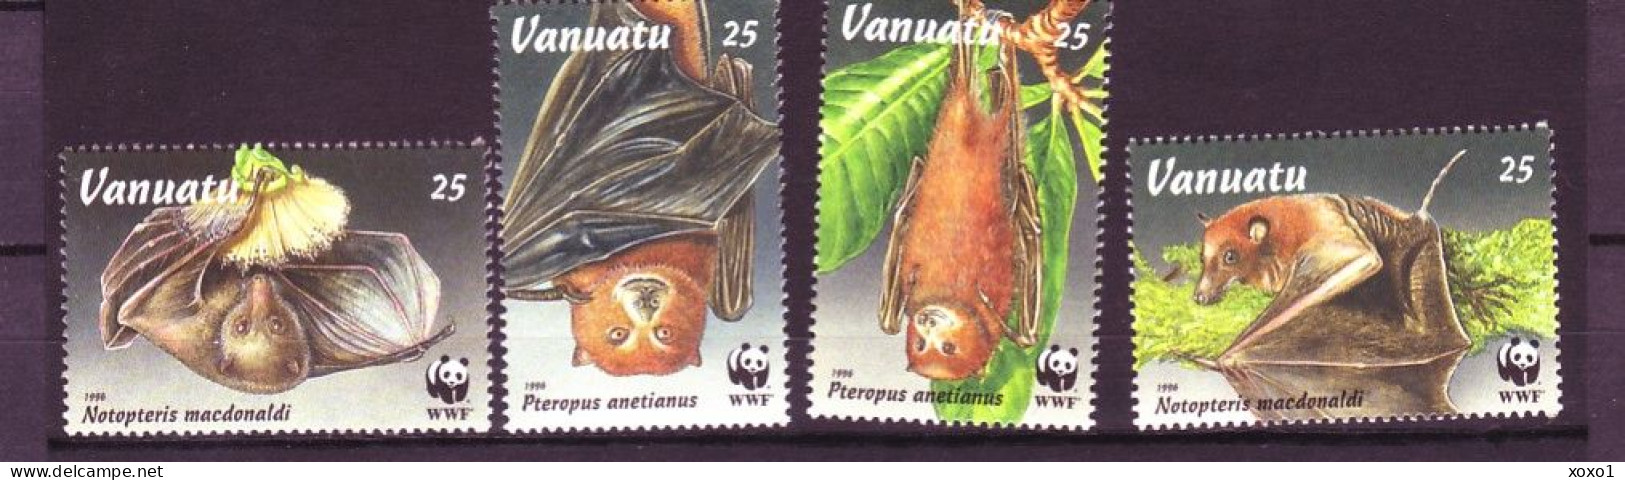 Vanuatu 1996 MiNr. 1004 - 1009 WWF Mammals Bats Insular Flying Fox, Fijian Blossom Bat  4v  MNH** 3.60 € - Pipistrelli